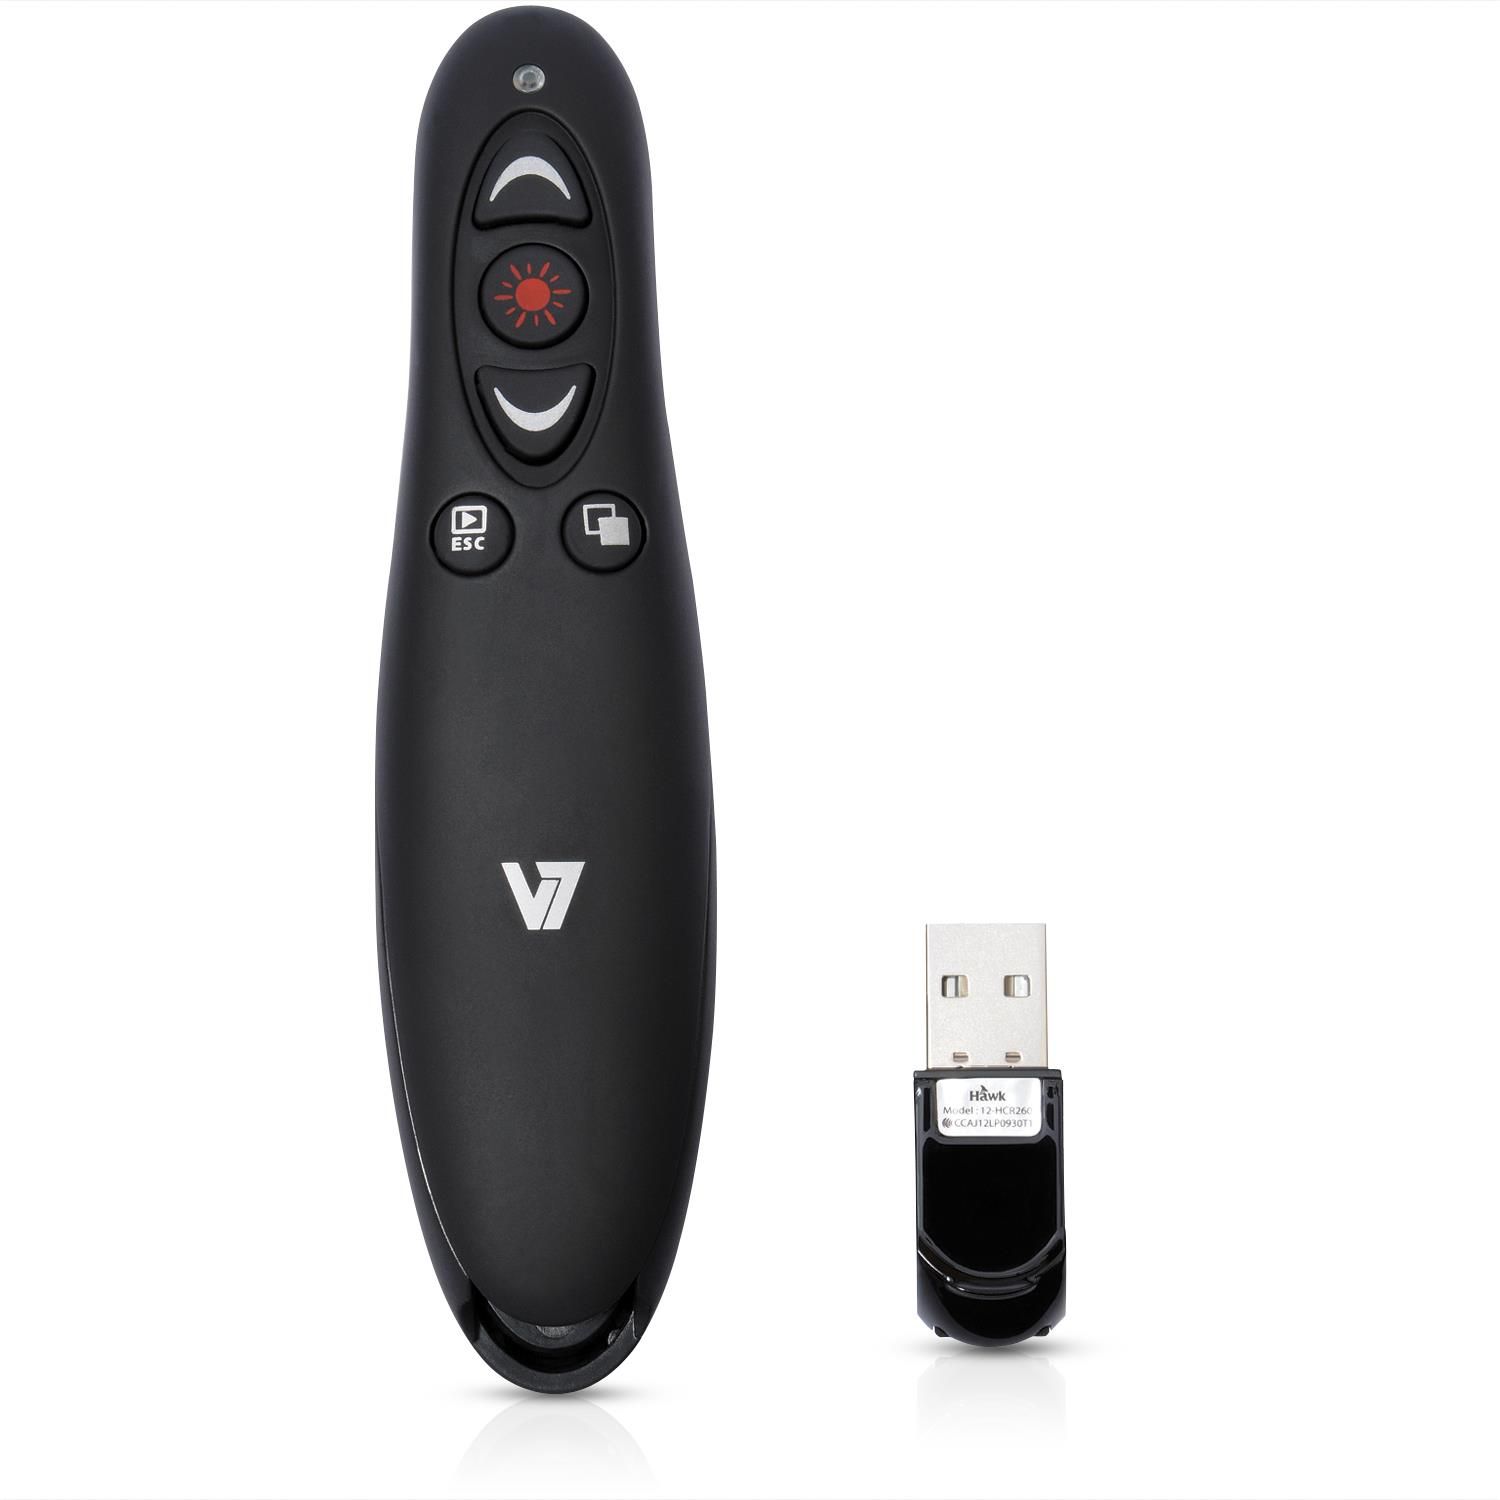 V7 Wireless Presenter 2.4ghz